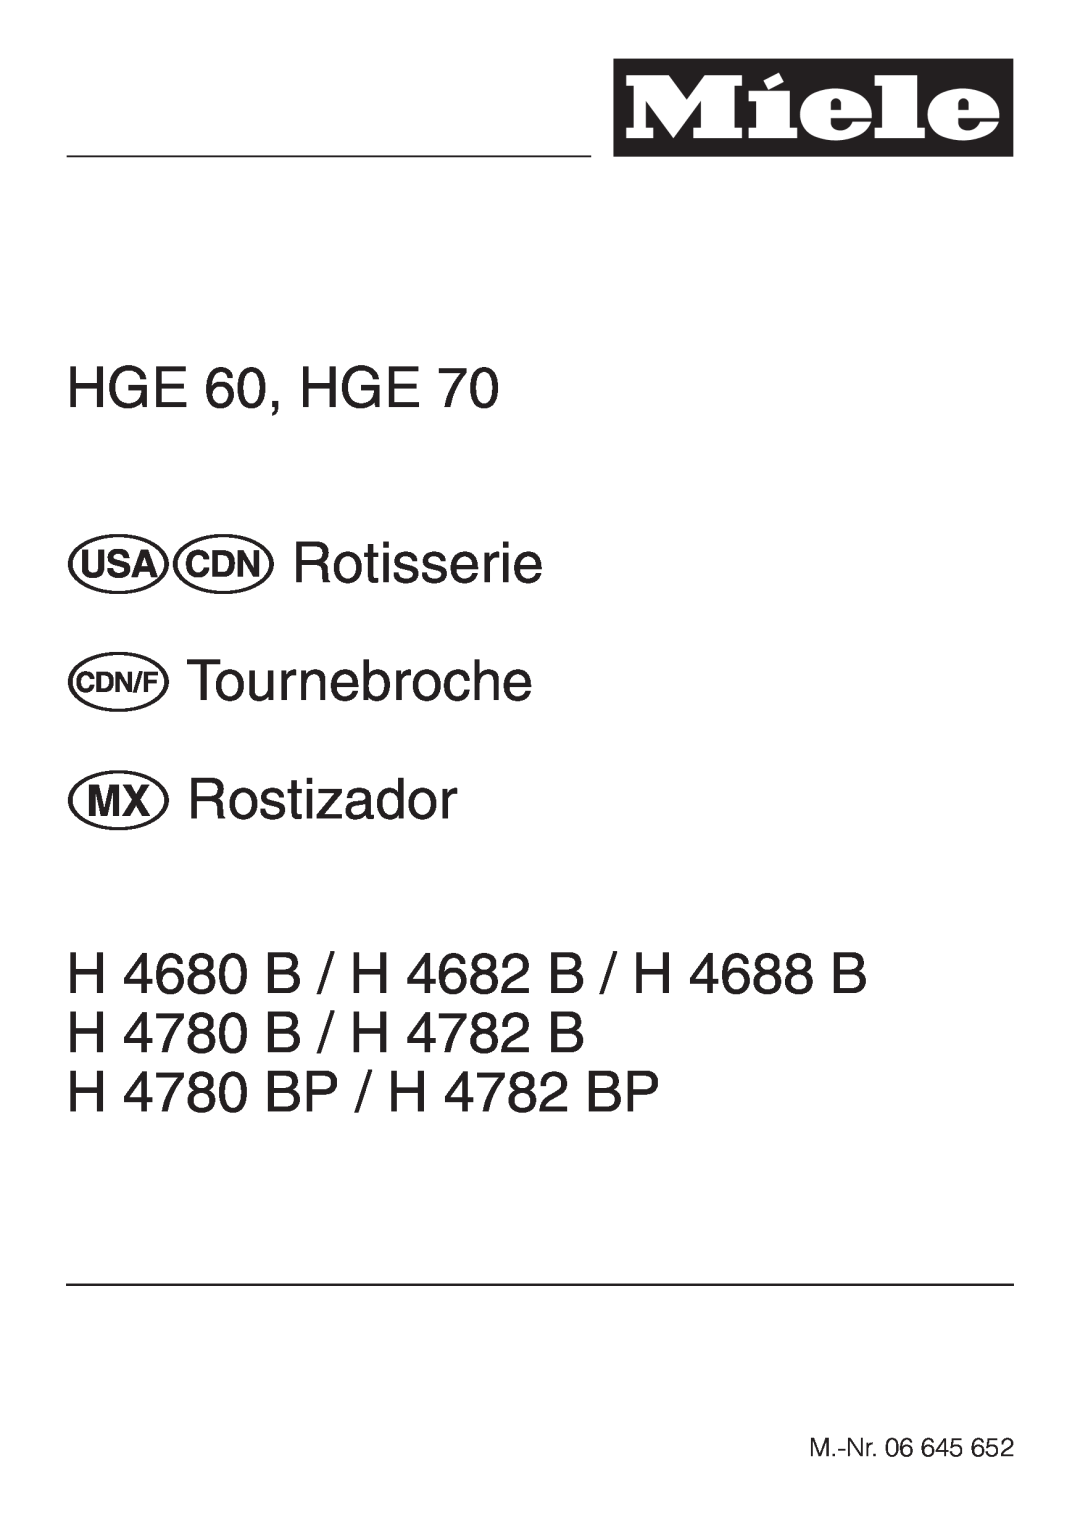 Miele manual HGE 60, HGE Rotisserie Tournebroche Rostizador, H 4780 BP / H 4782 BP, M.-Nr.06 